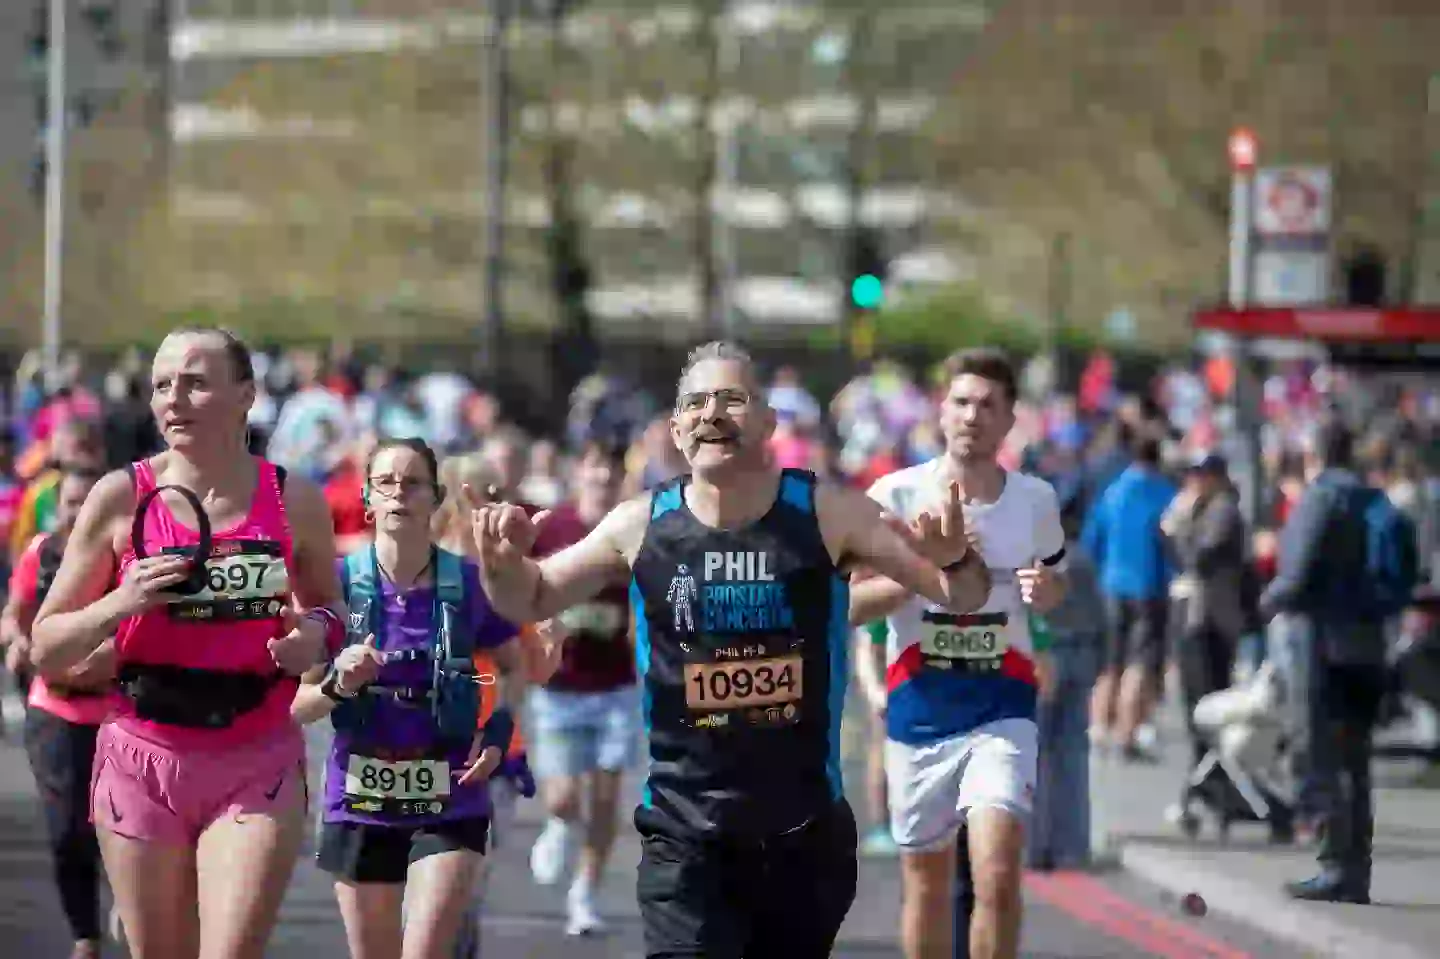 Phil Run Llhm Marathon